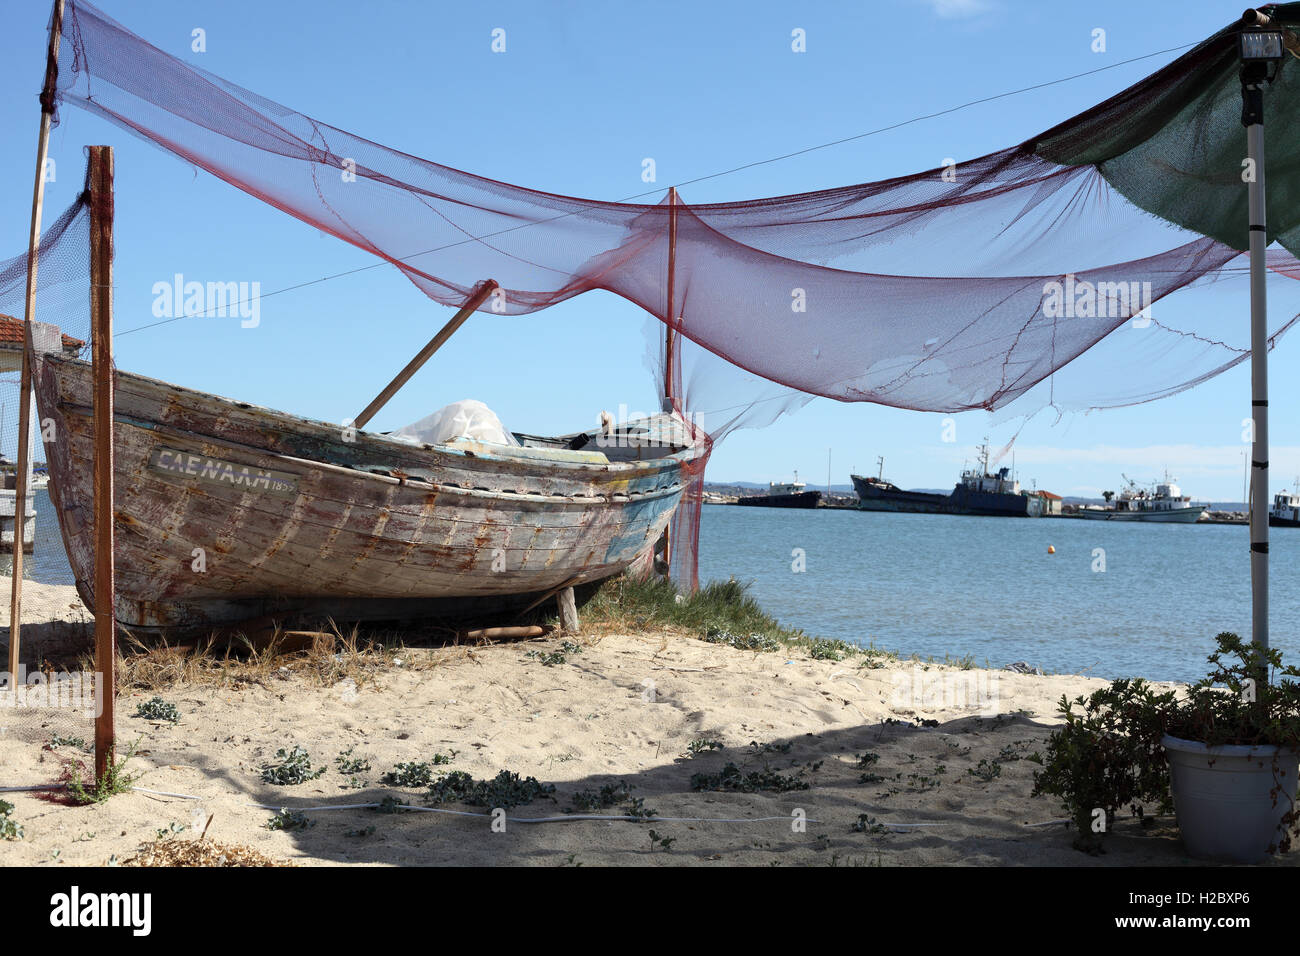 Old fishing boat and nets, Nea Moudania harbour, Macedonia, Greece Stock Photo